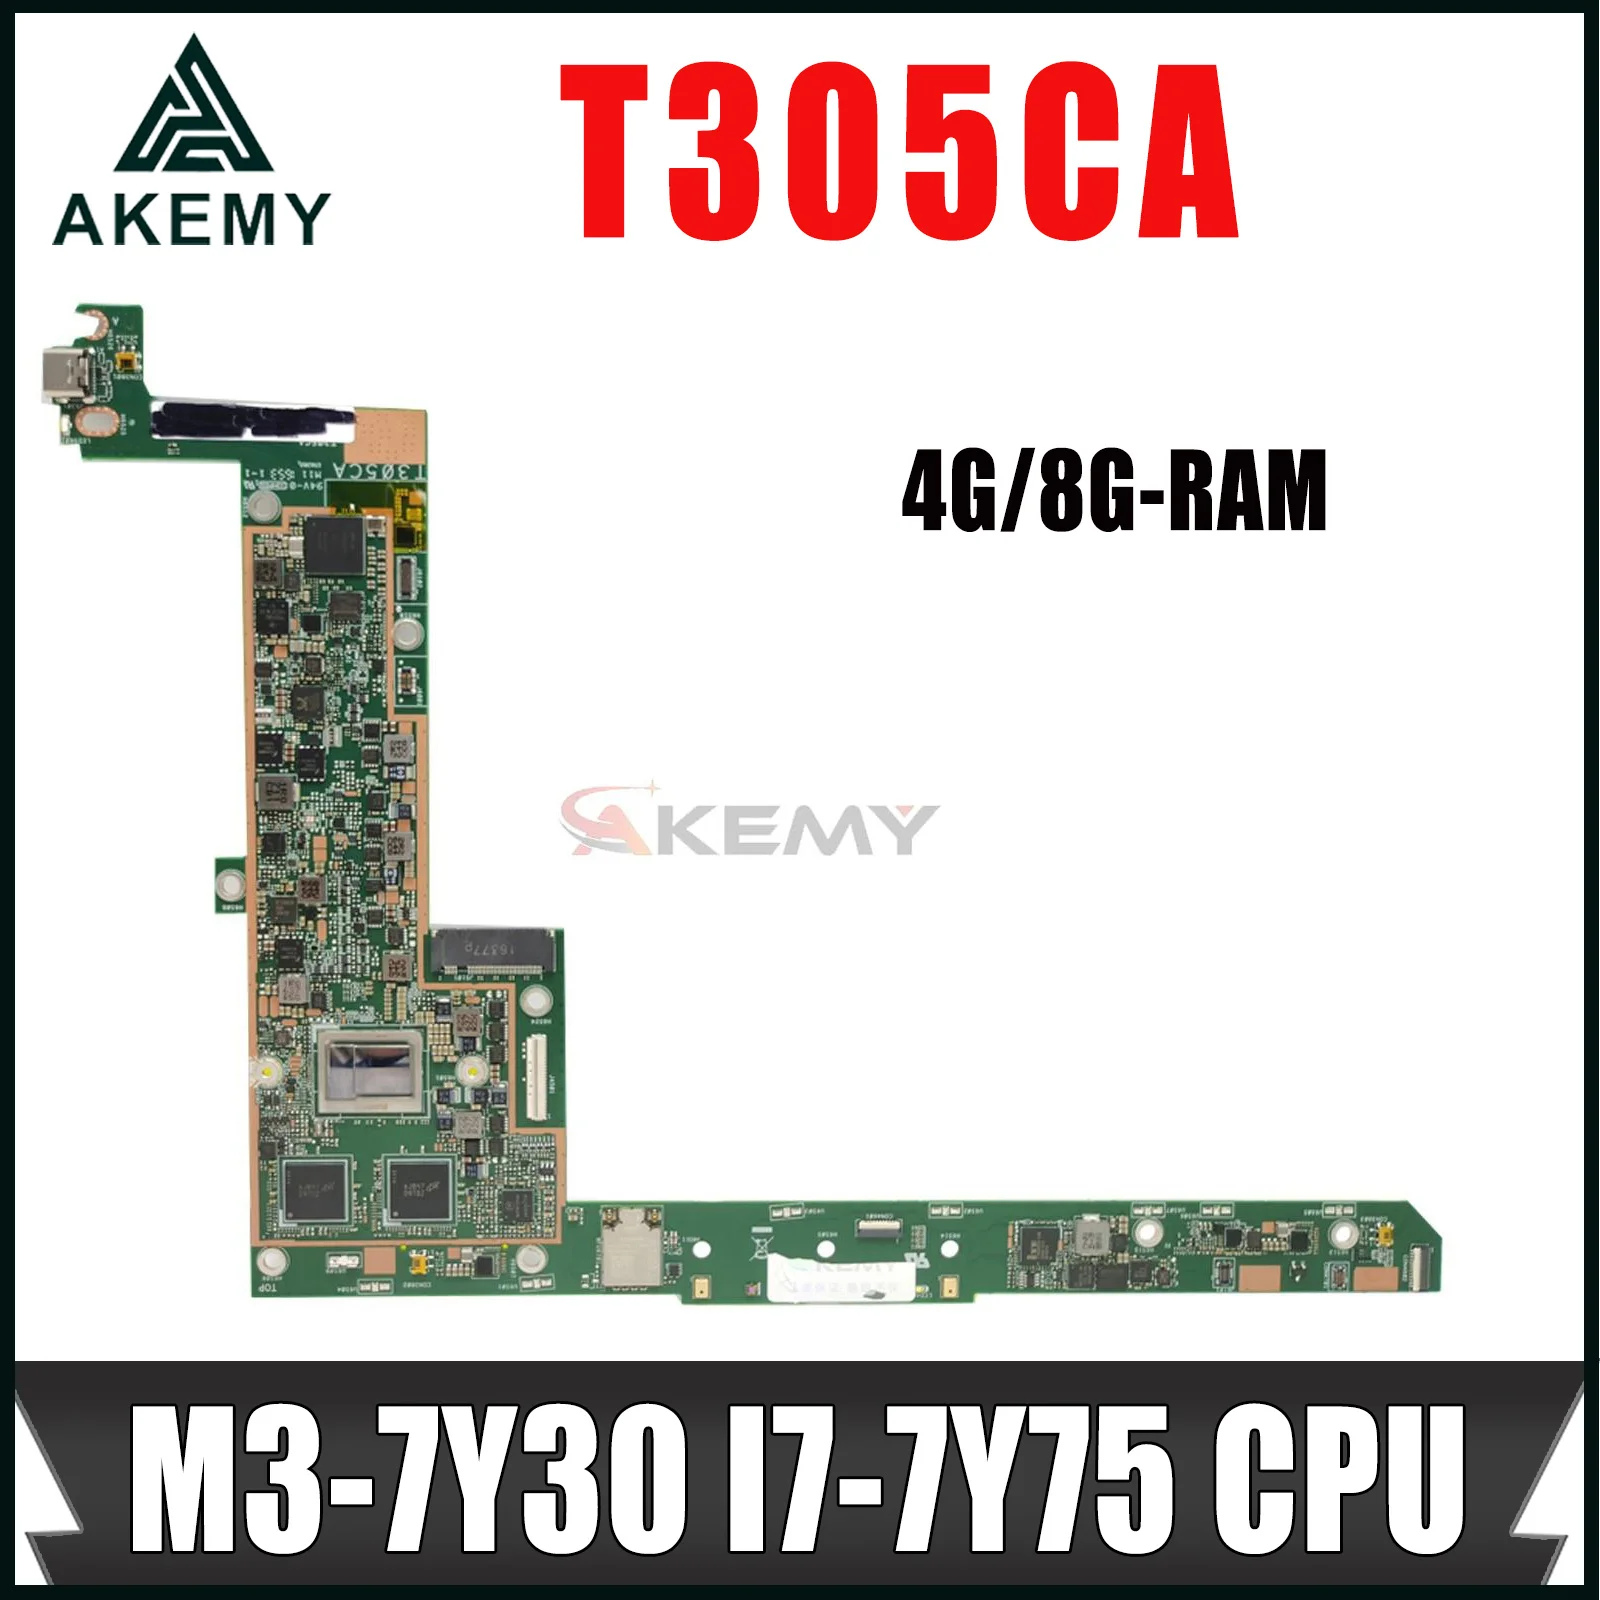 

Для ASUS T305CA Laotop материнская плата T305C T305CA материнская плата с 4G/8G-RAM M3-7Y30 I7-7Y7 5 CPU